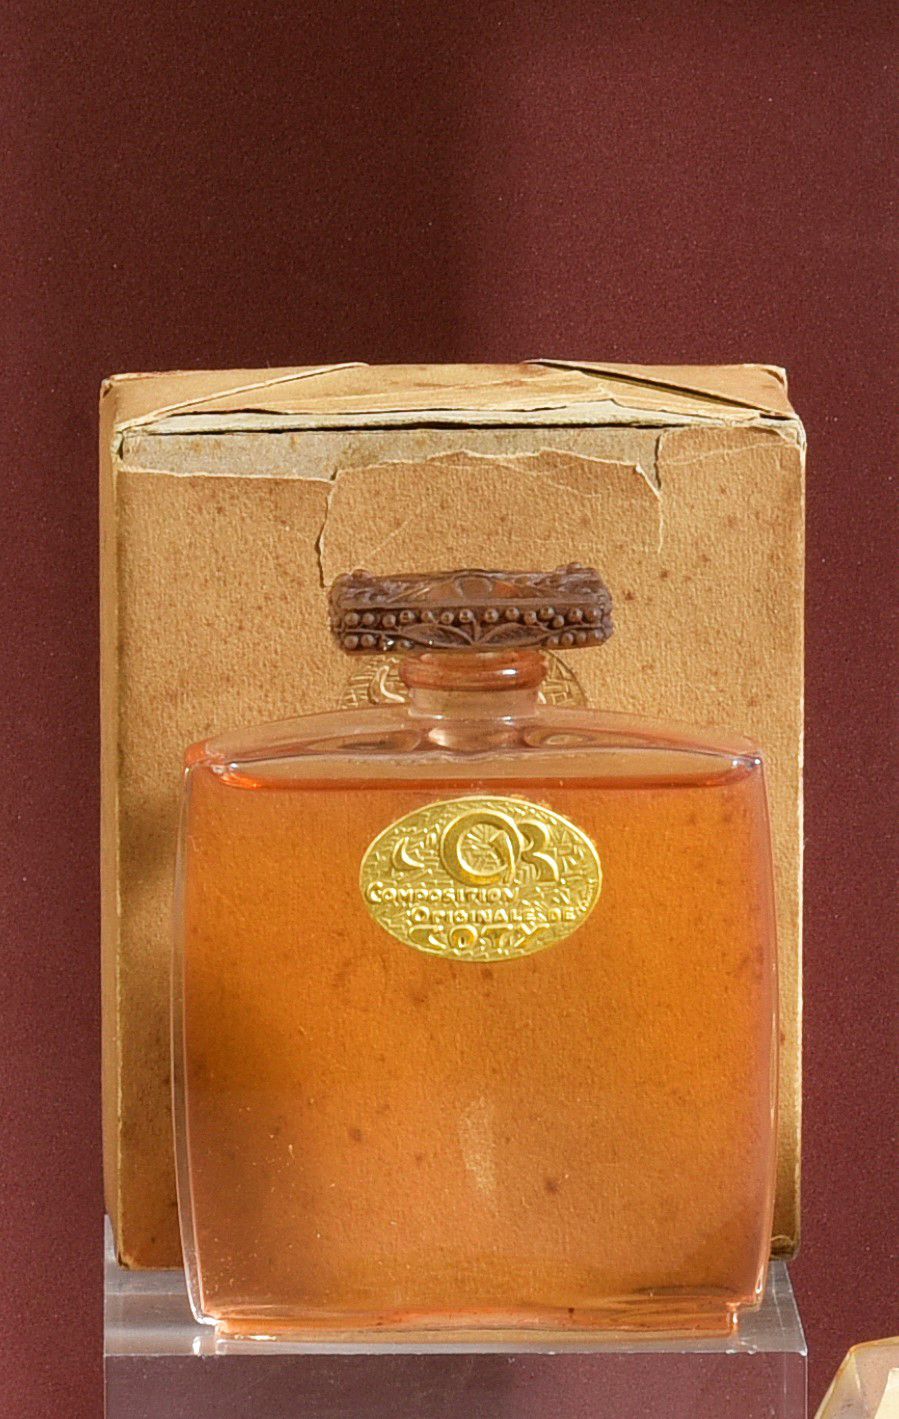 Coty - «L'Or» - (1922) 
无色玻璃瓶，横截面为长方形，瓶身为正方形，瓶颈为网状，瓶塞为长方形，上面有两只相向的蝴蝶的模制装饰，还有一个压印&hellip;